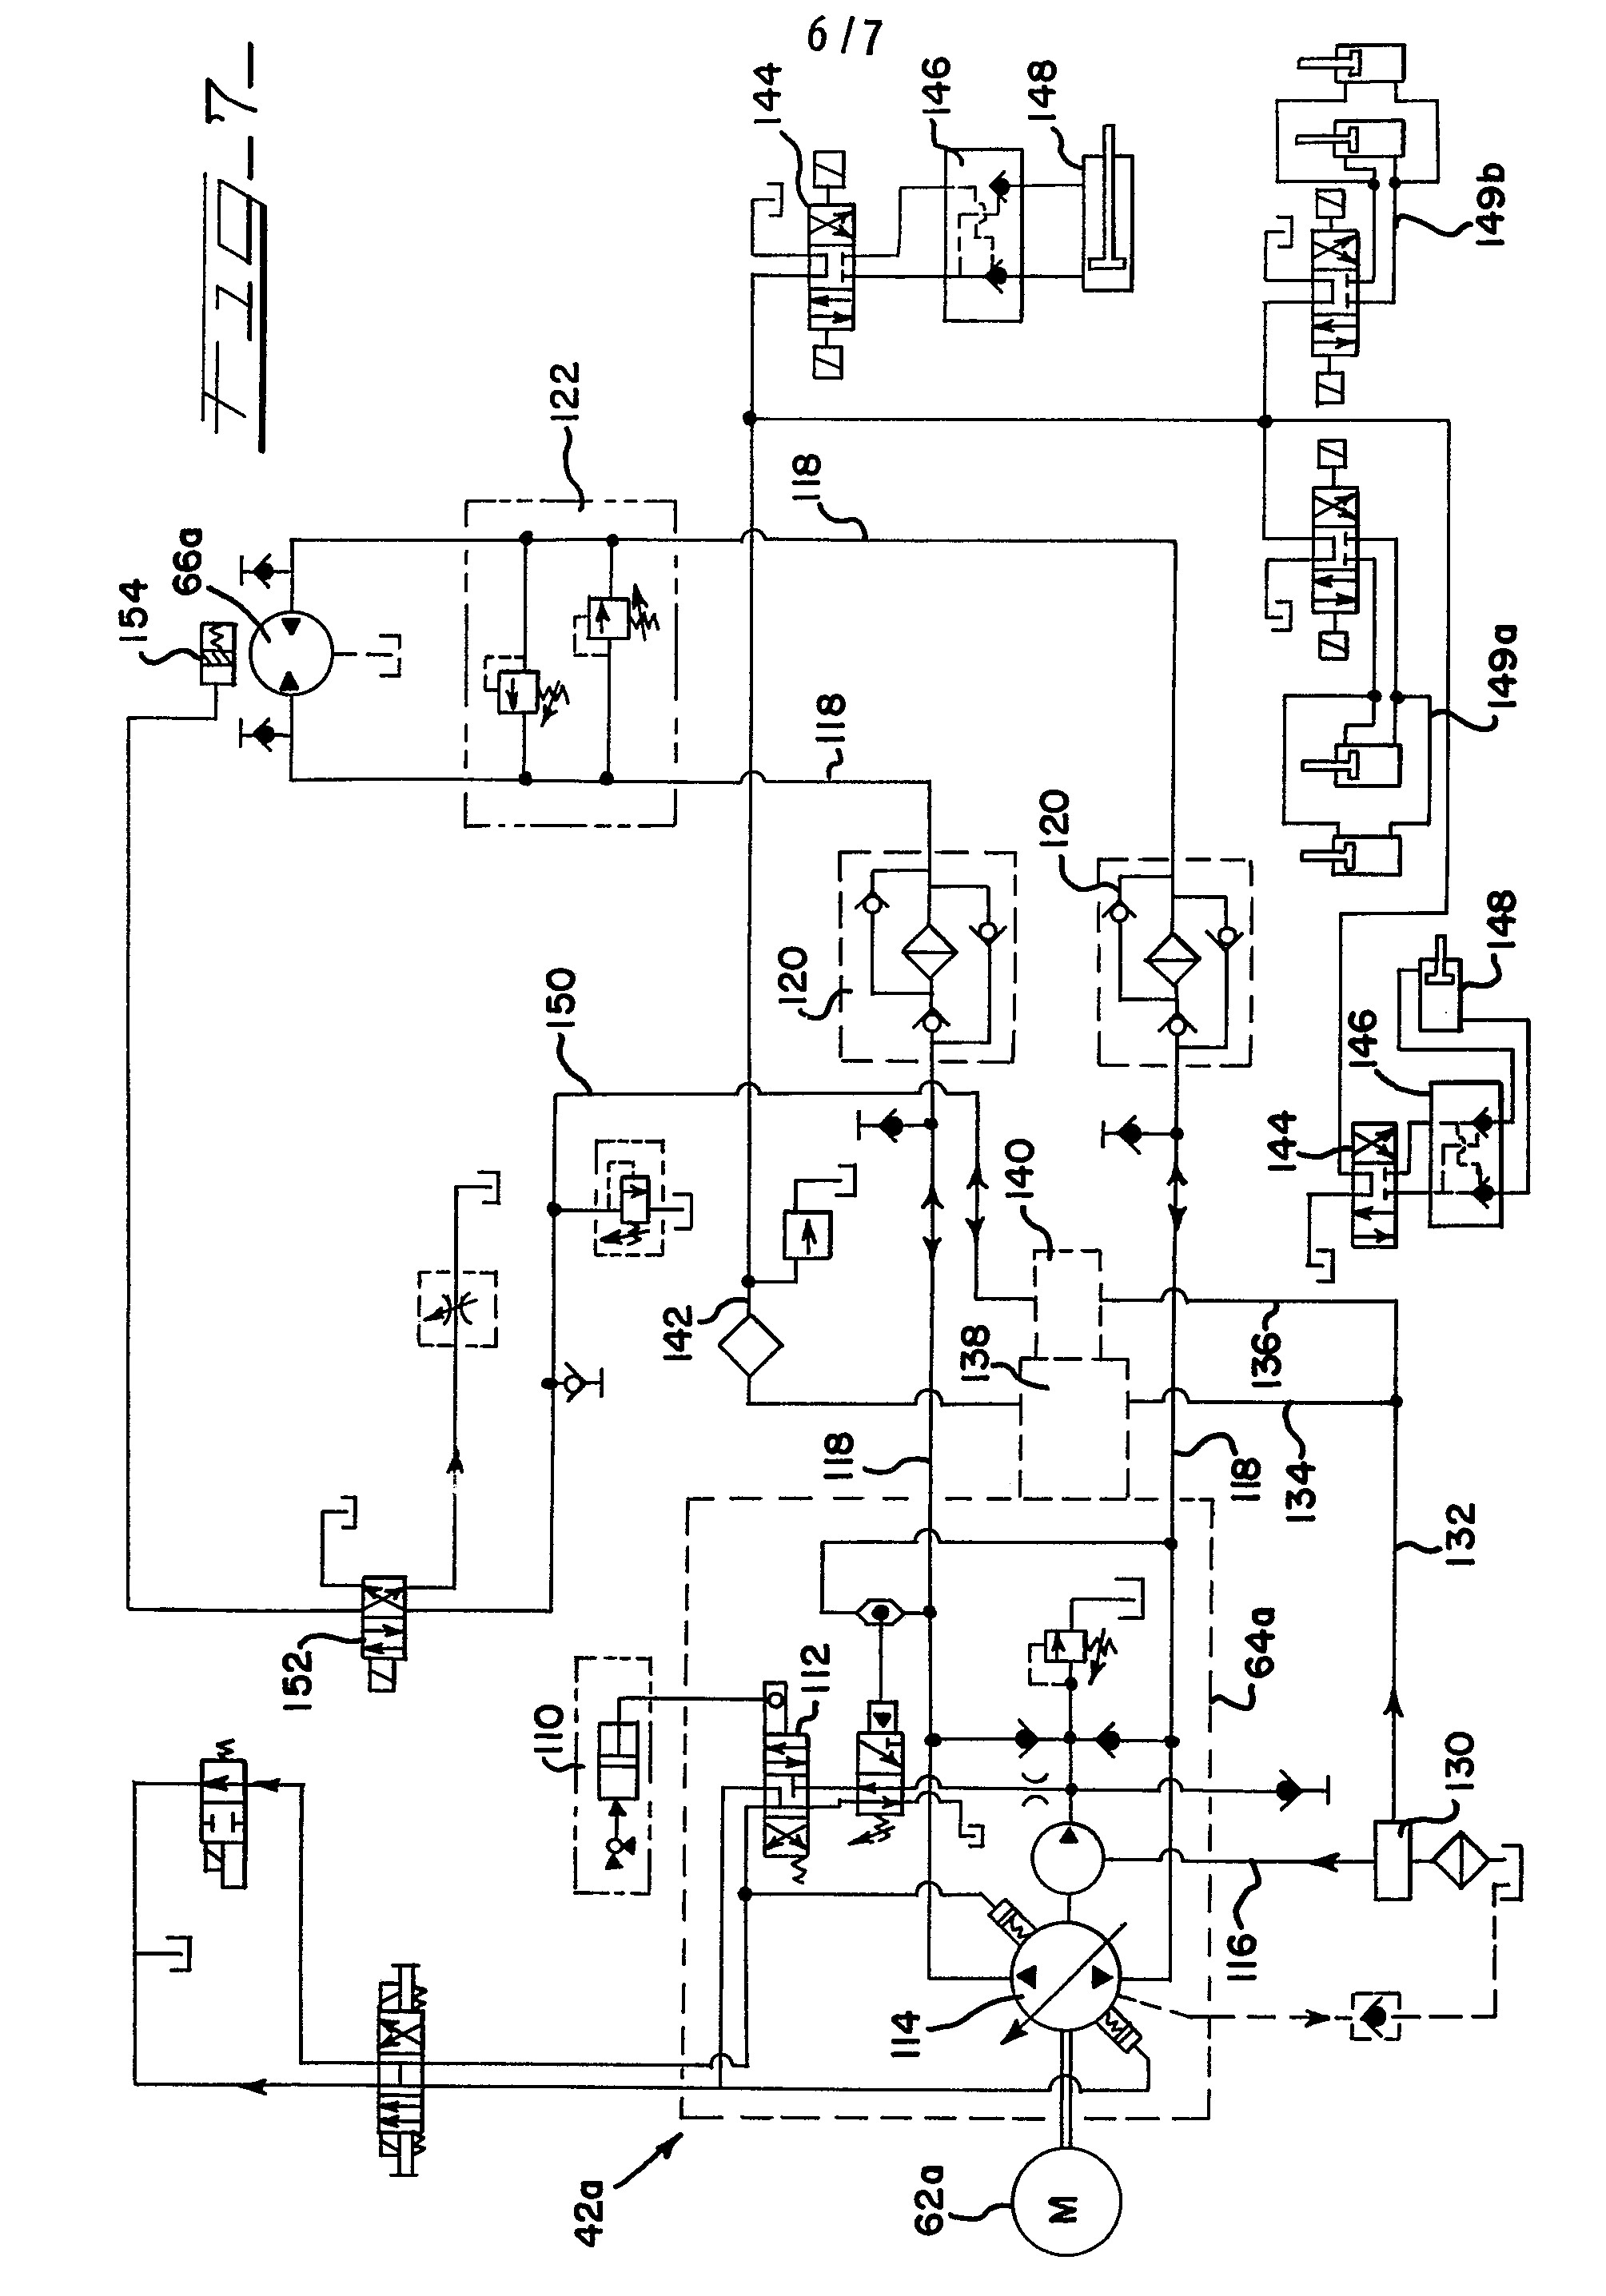 Whirlpool Refrigerator Wiring Diagr Whirlpool Estate Dryer Wiring Diagram